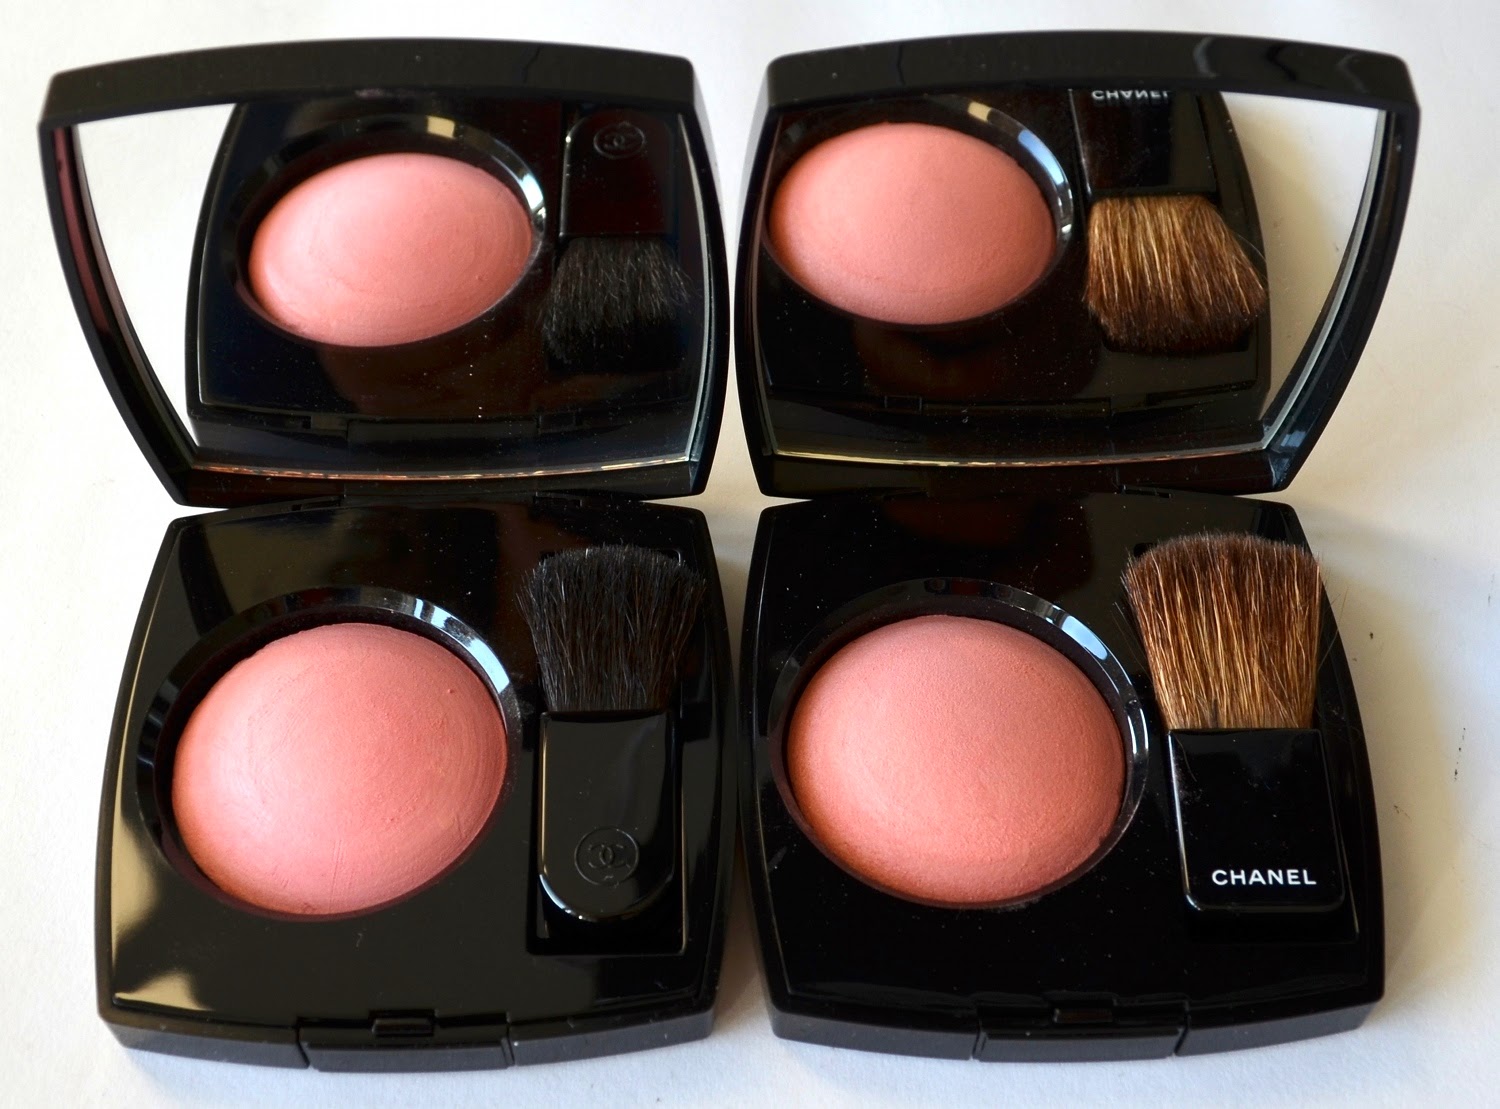 Chanel Joues Contraste Powder Blush in 370 Élégance - Makeup and